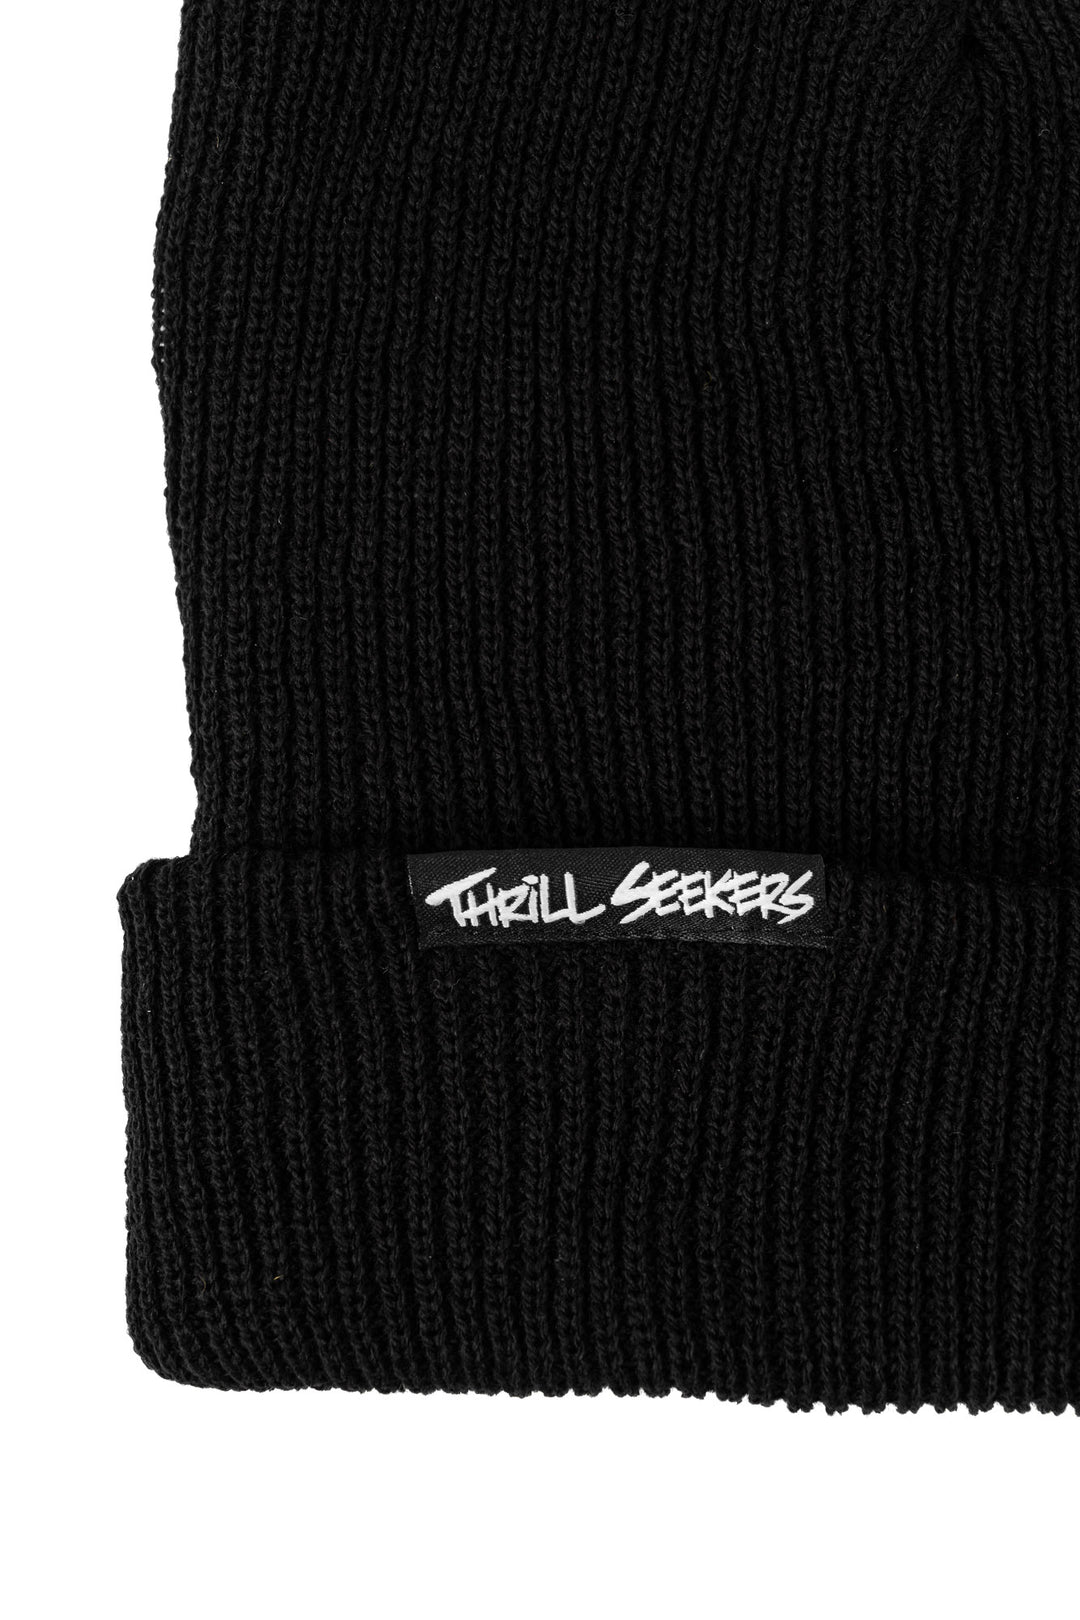 Thrill Seekers Loose Knit Beanie Black